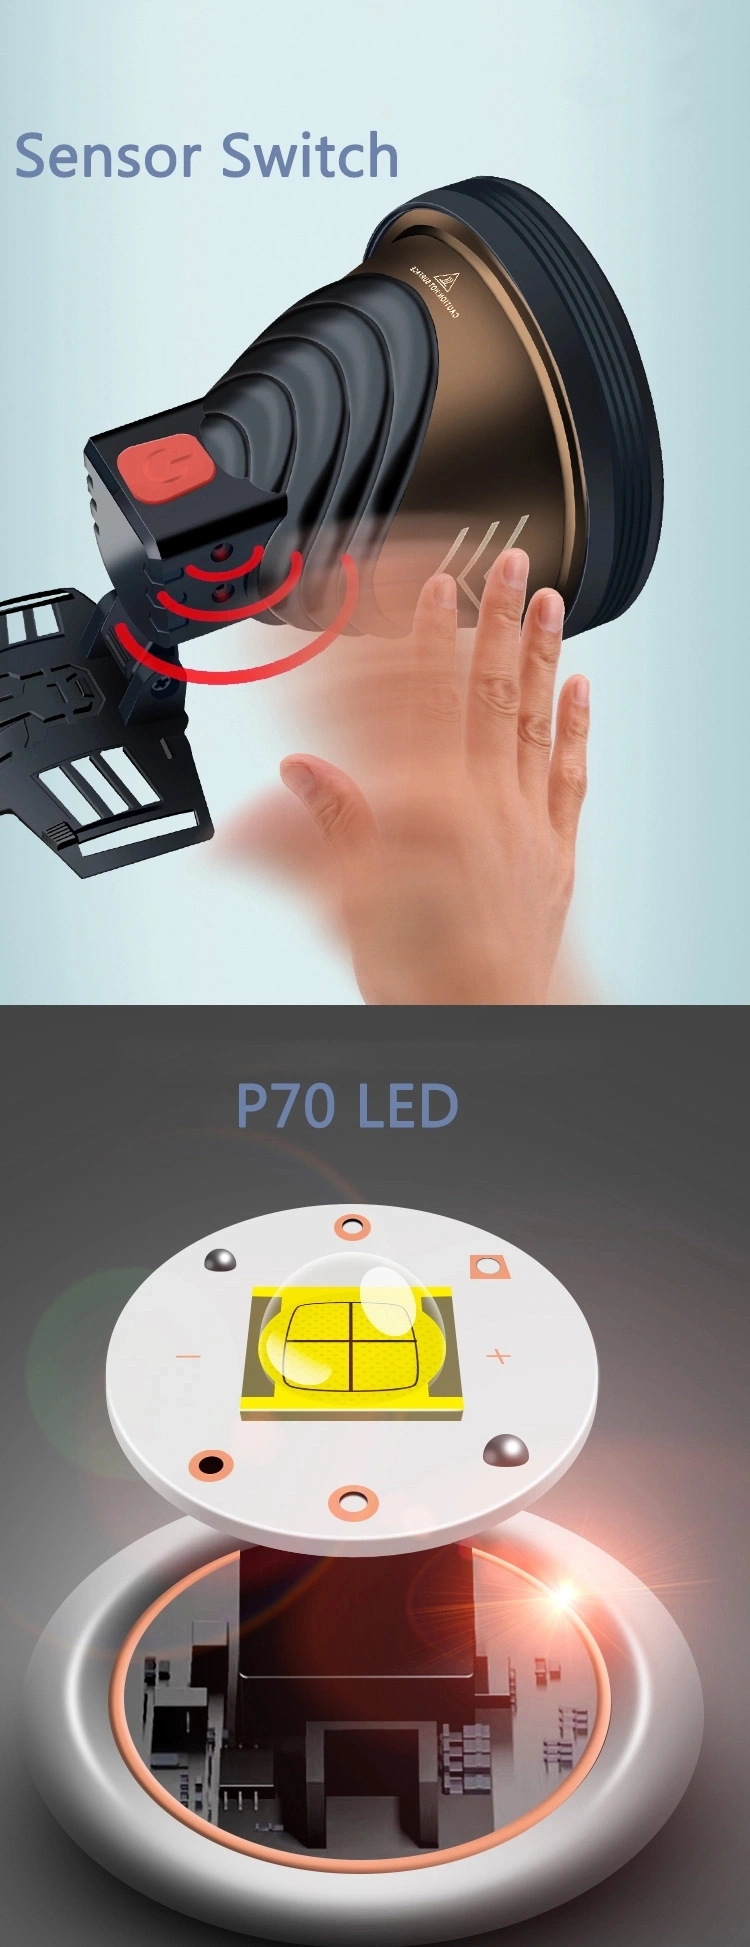 Powerful Xhp90 3*18650 Battery USB Rechargeable Waterproof Zoom Fishing Light LED Headlamp